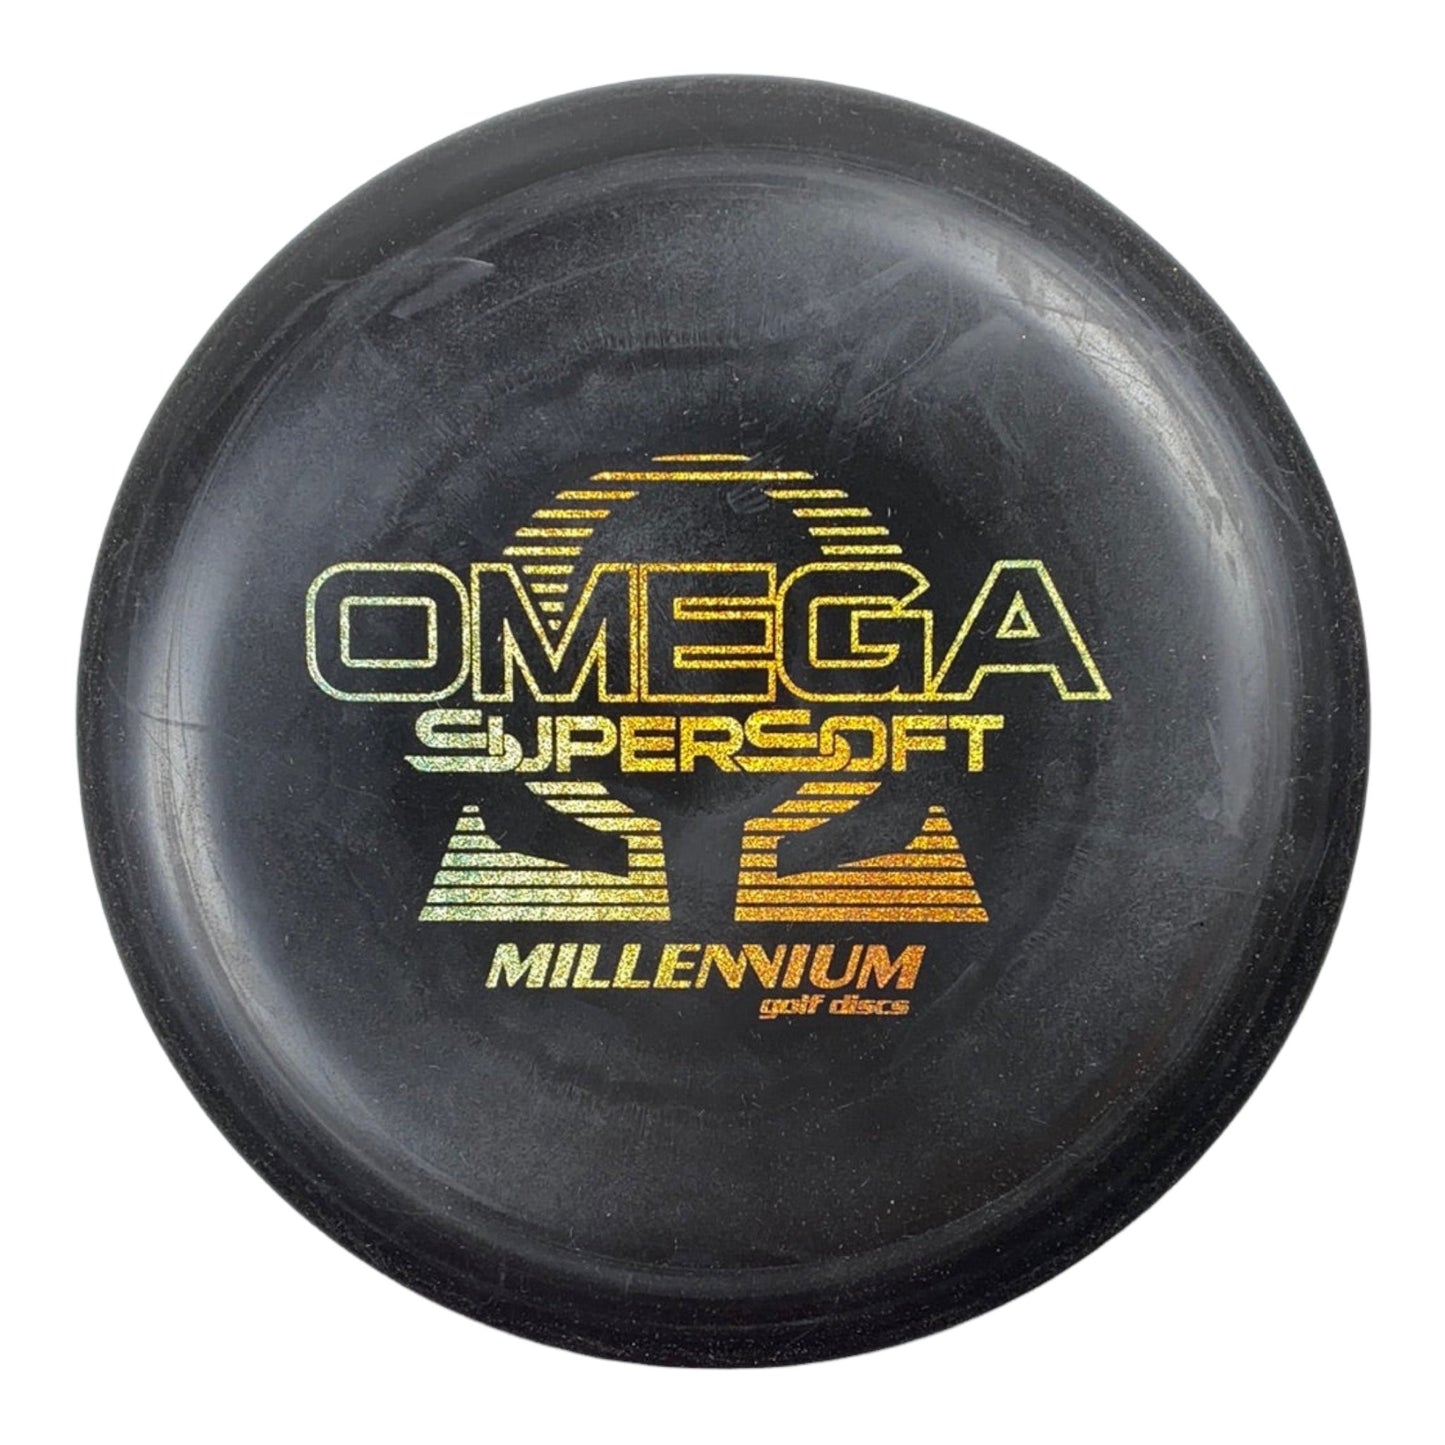 Millennium Golf Discs Omega | Supersoft | Black/Gold 155-157g Disc Golf